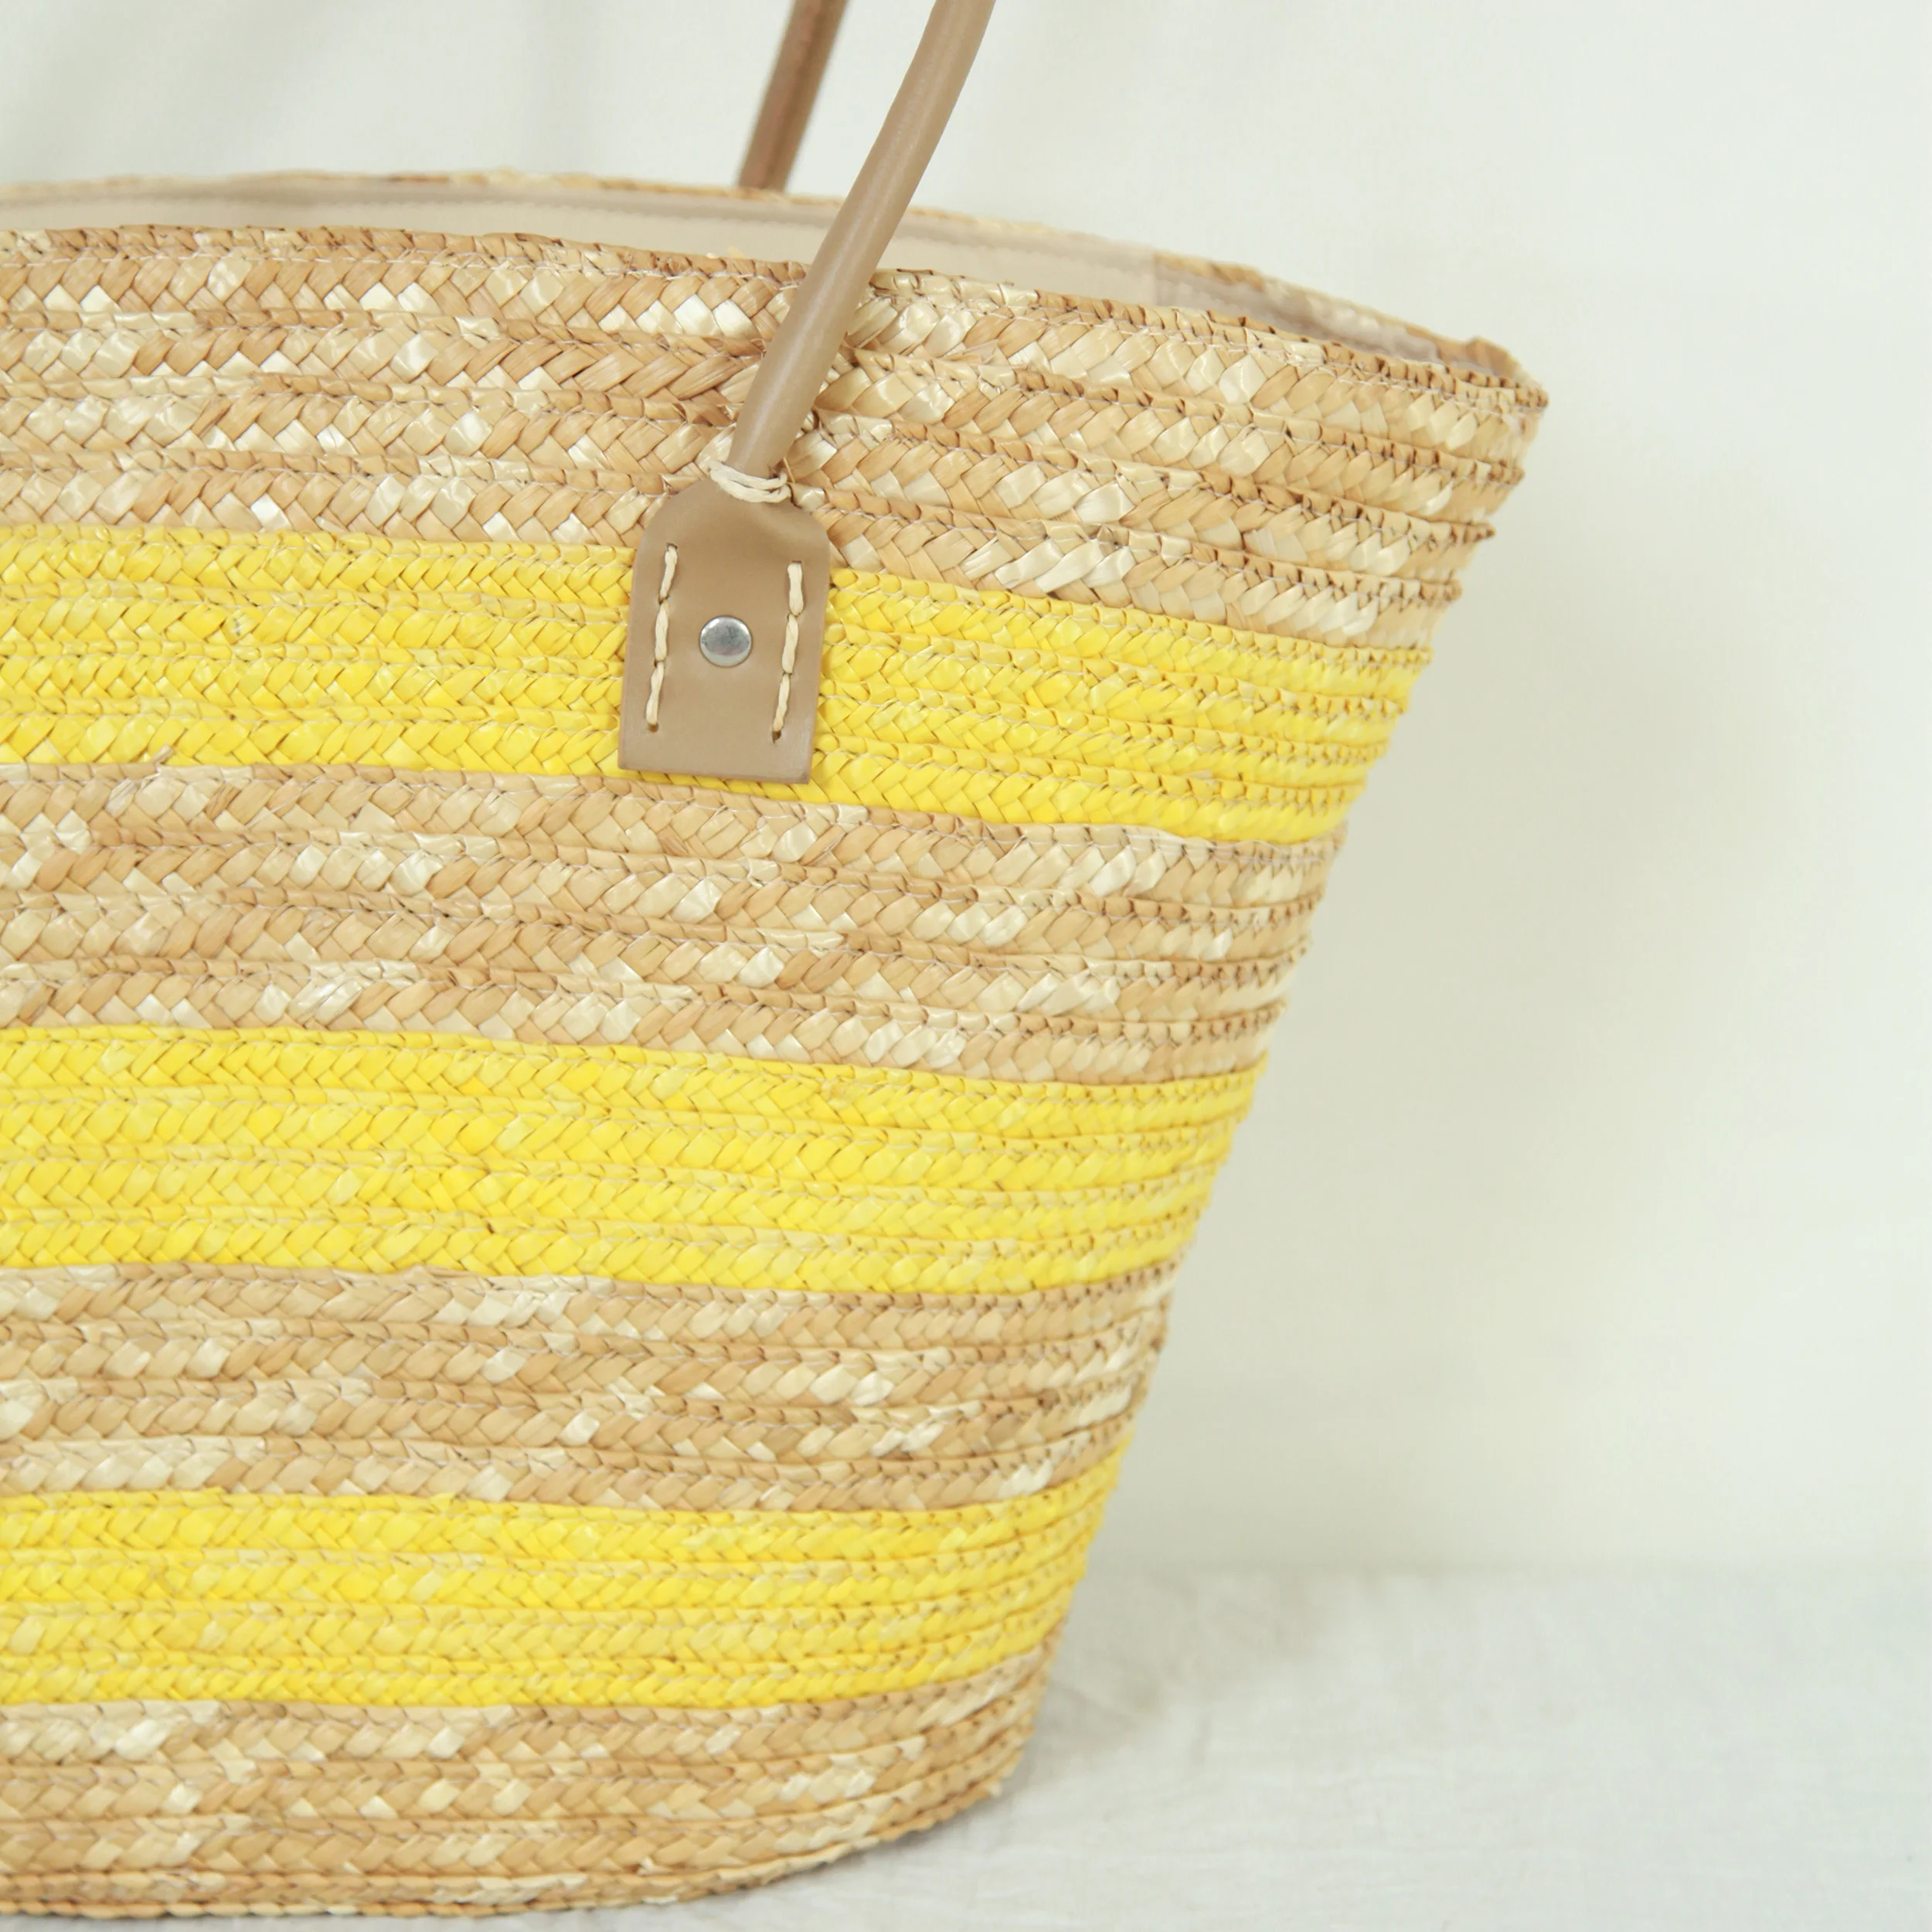 Handmade beach bag summer vacation leisure bag large capacity straw braided shoulder bag